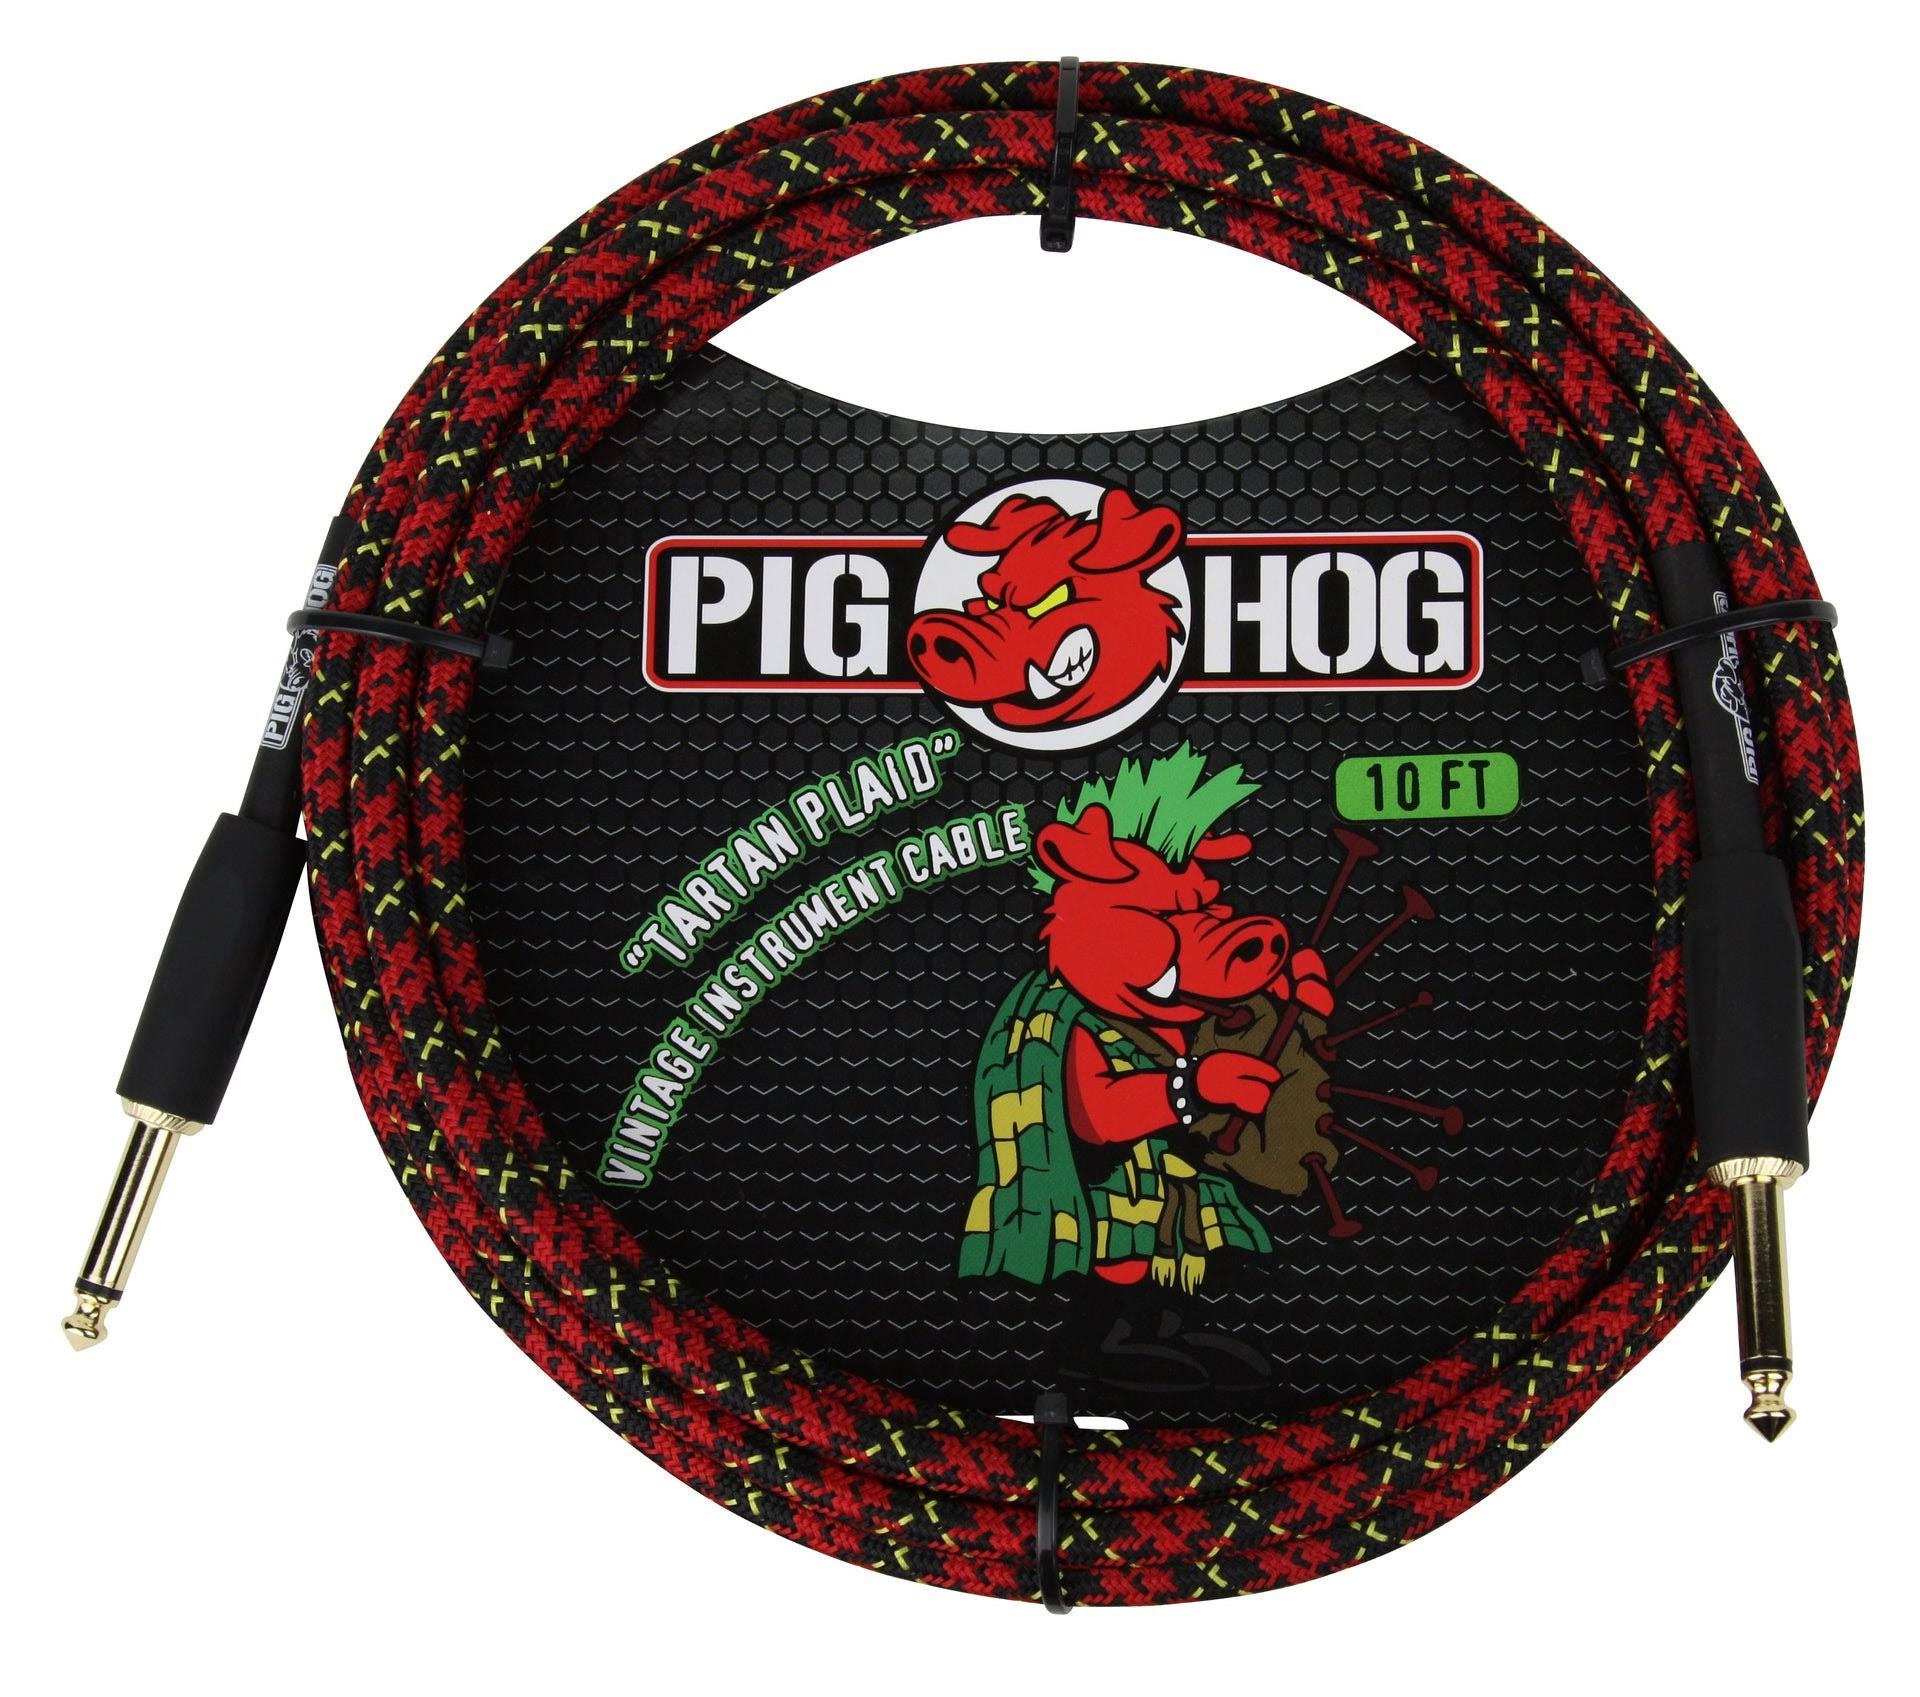 Pig Hog Instrument Cable - 10', Tartan Plaid